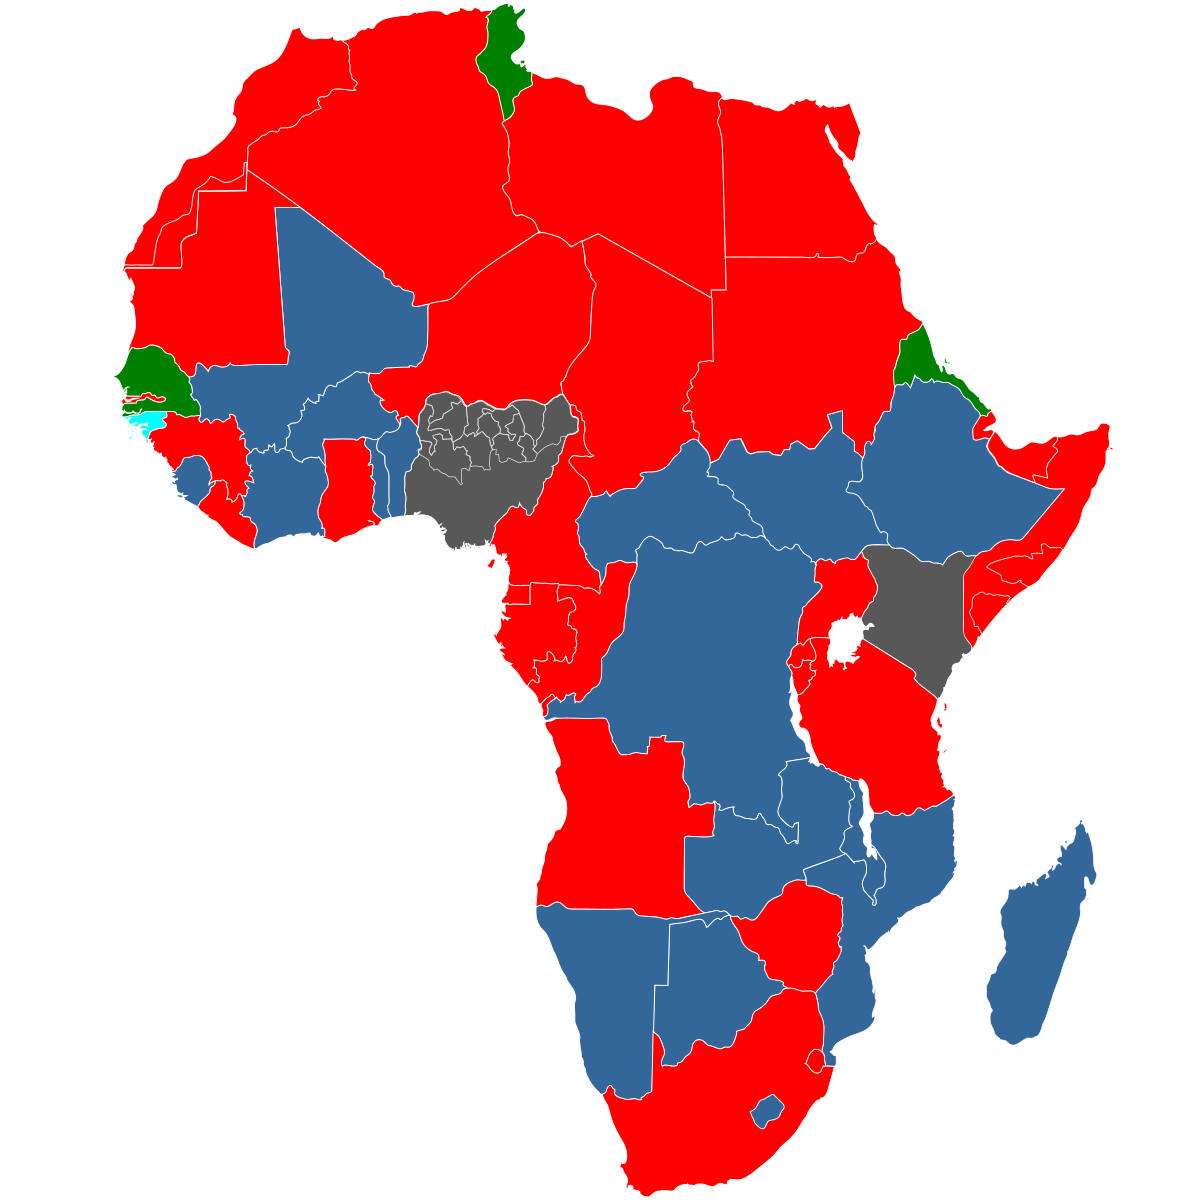 Prostitution in Africa - Wikipedia